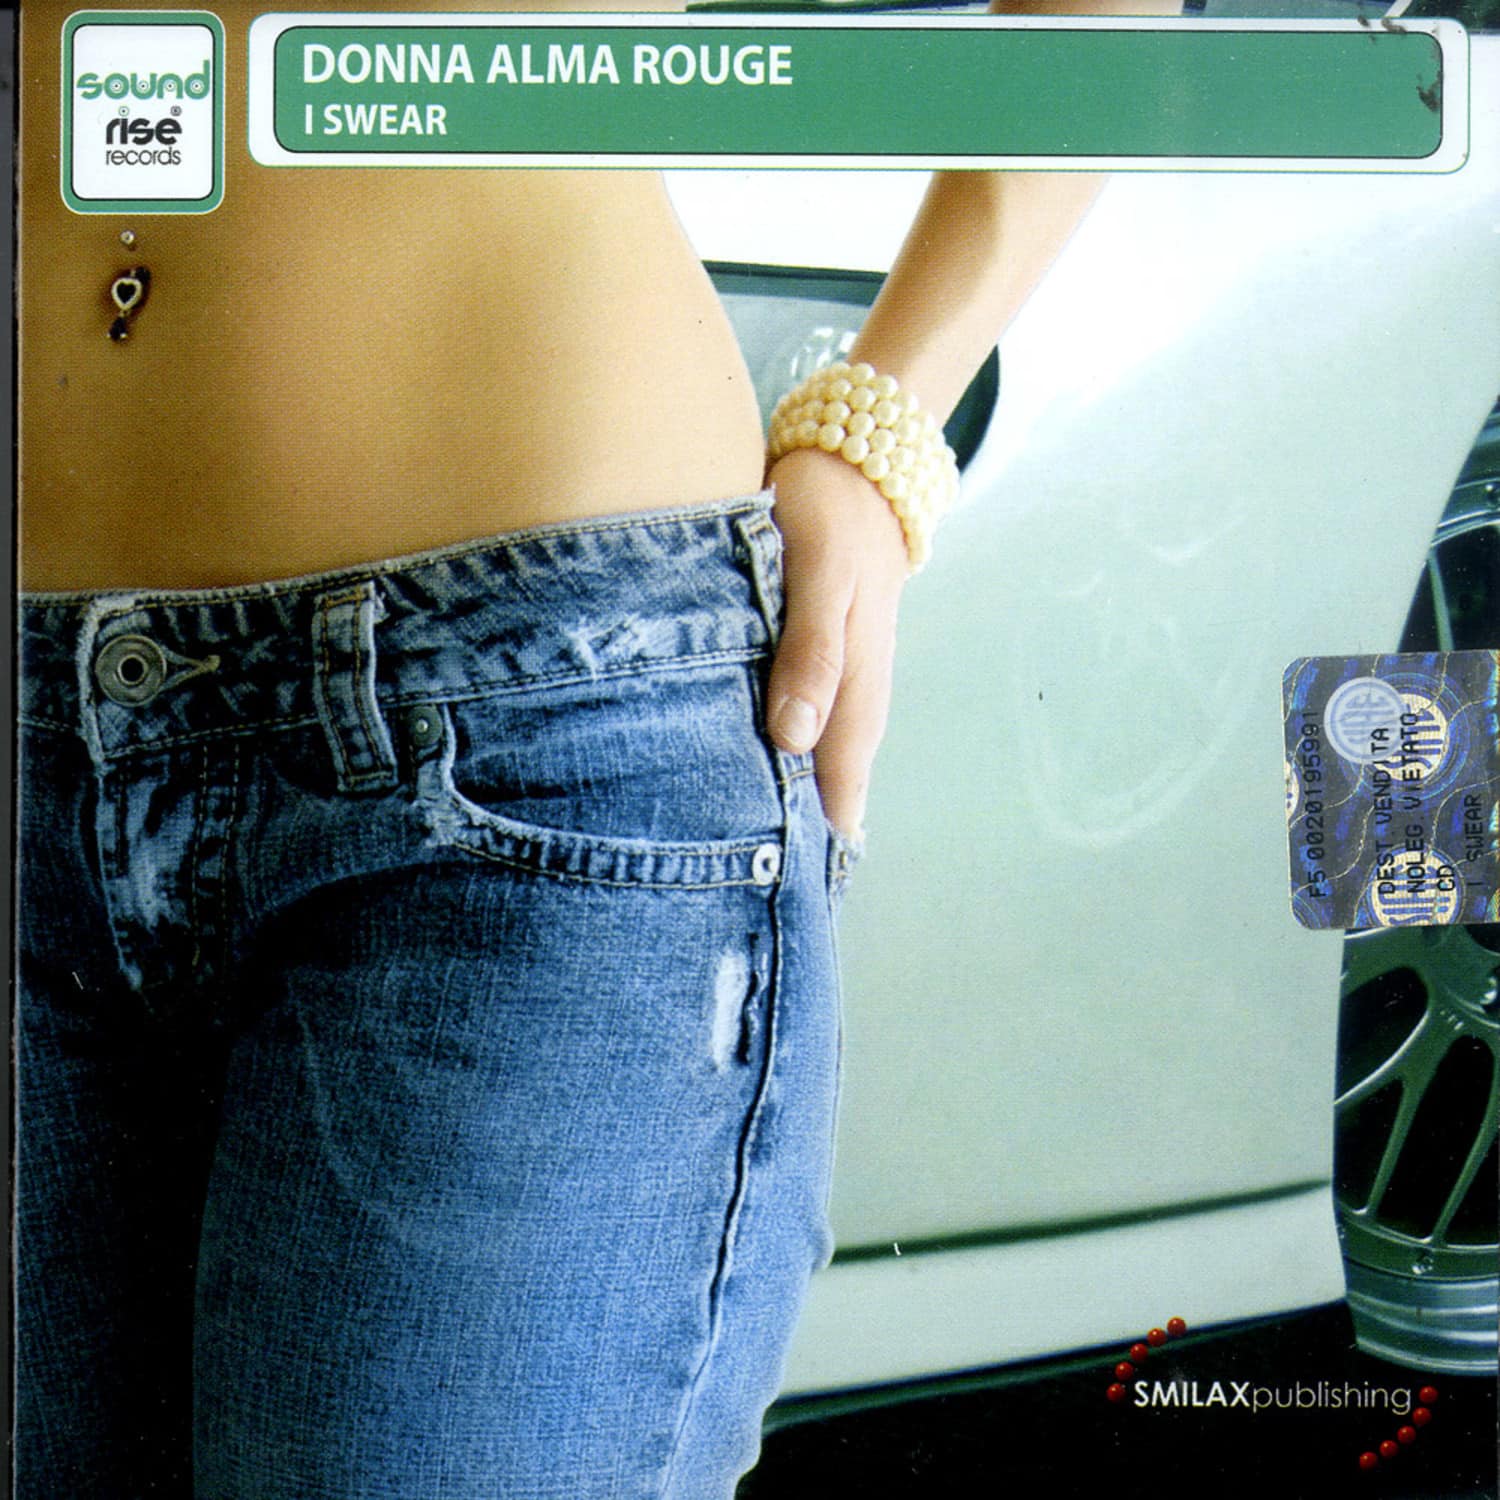 Donna Alma Rouge - I SWEAR 